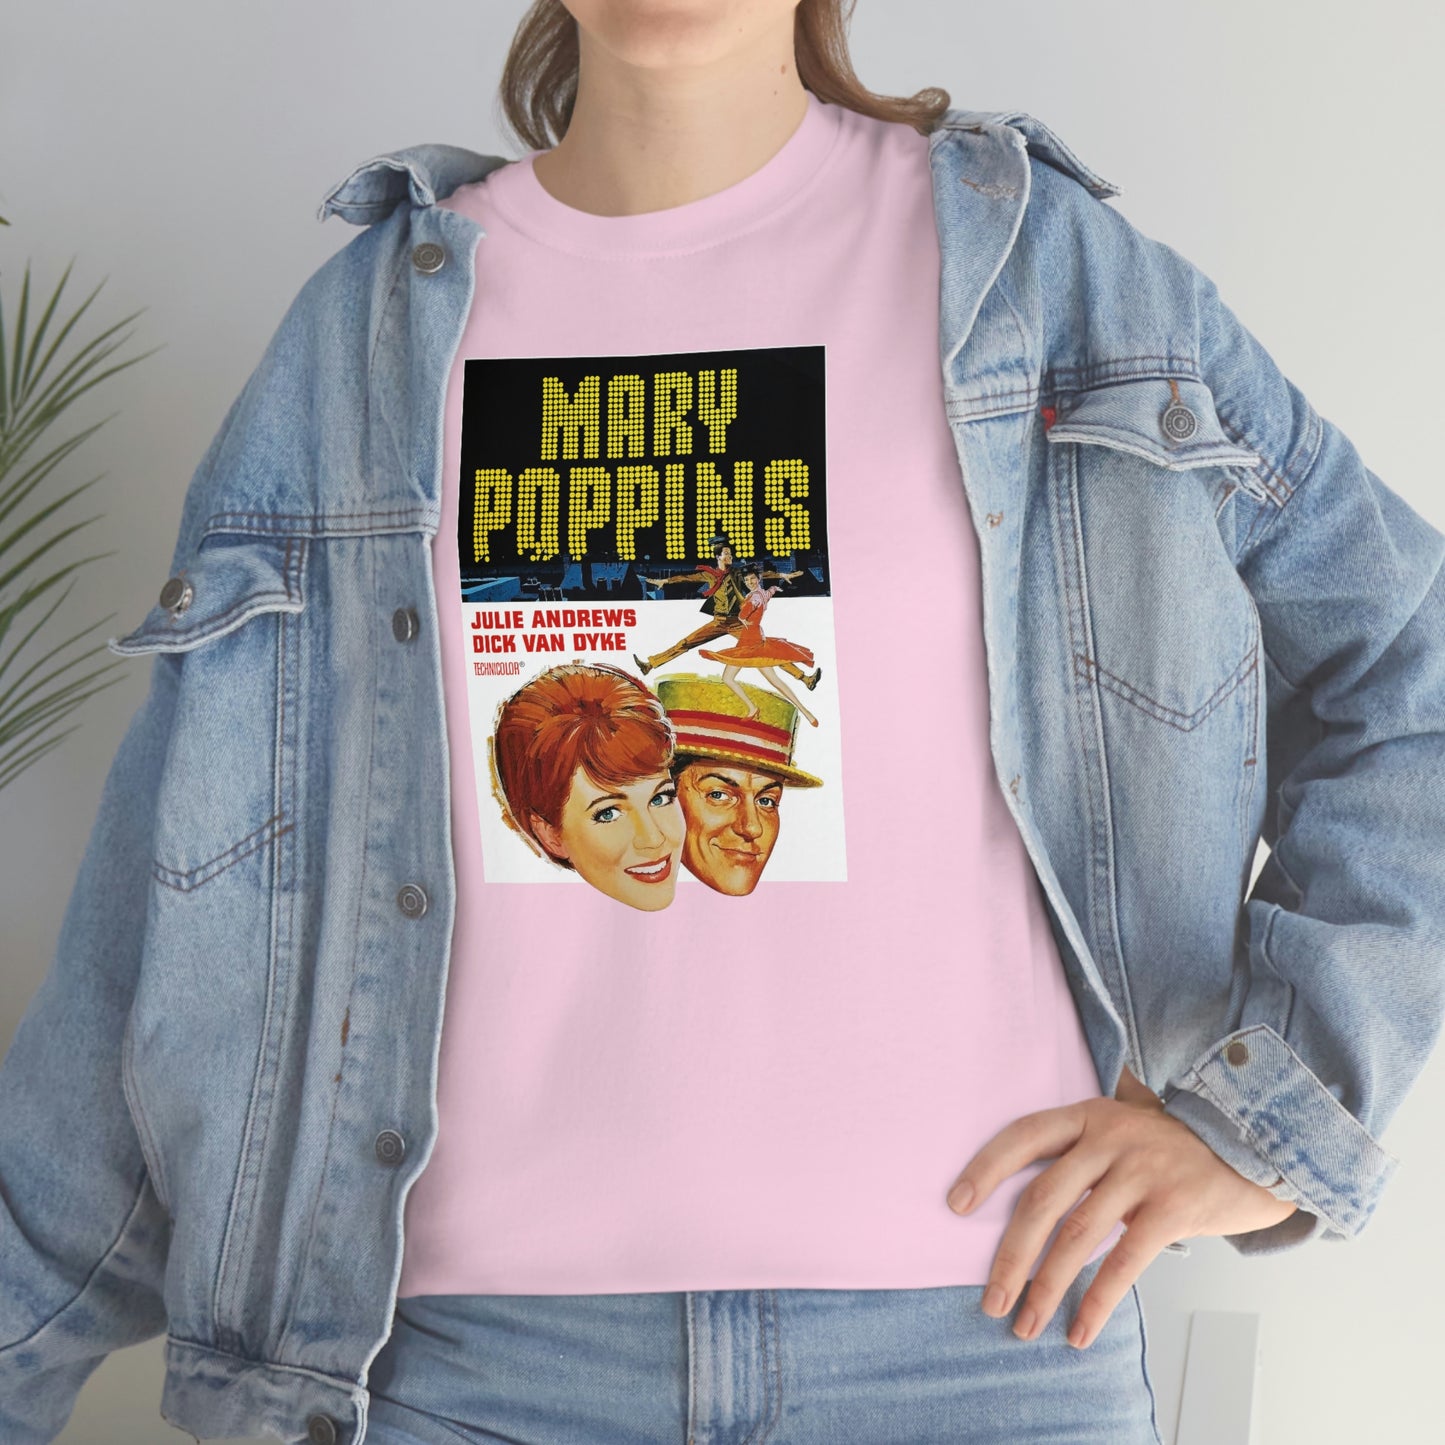 Mary Poppins T-Shirt